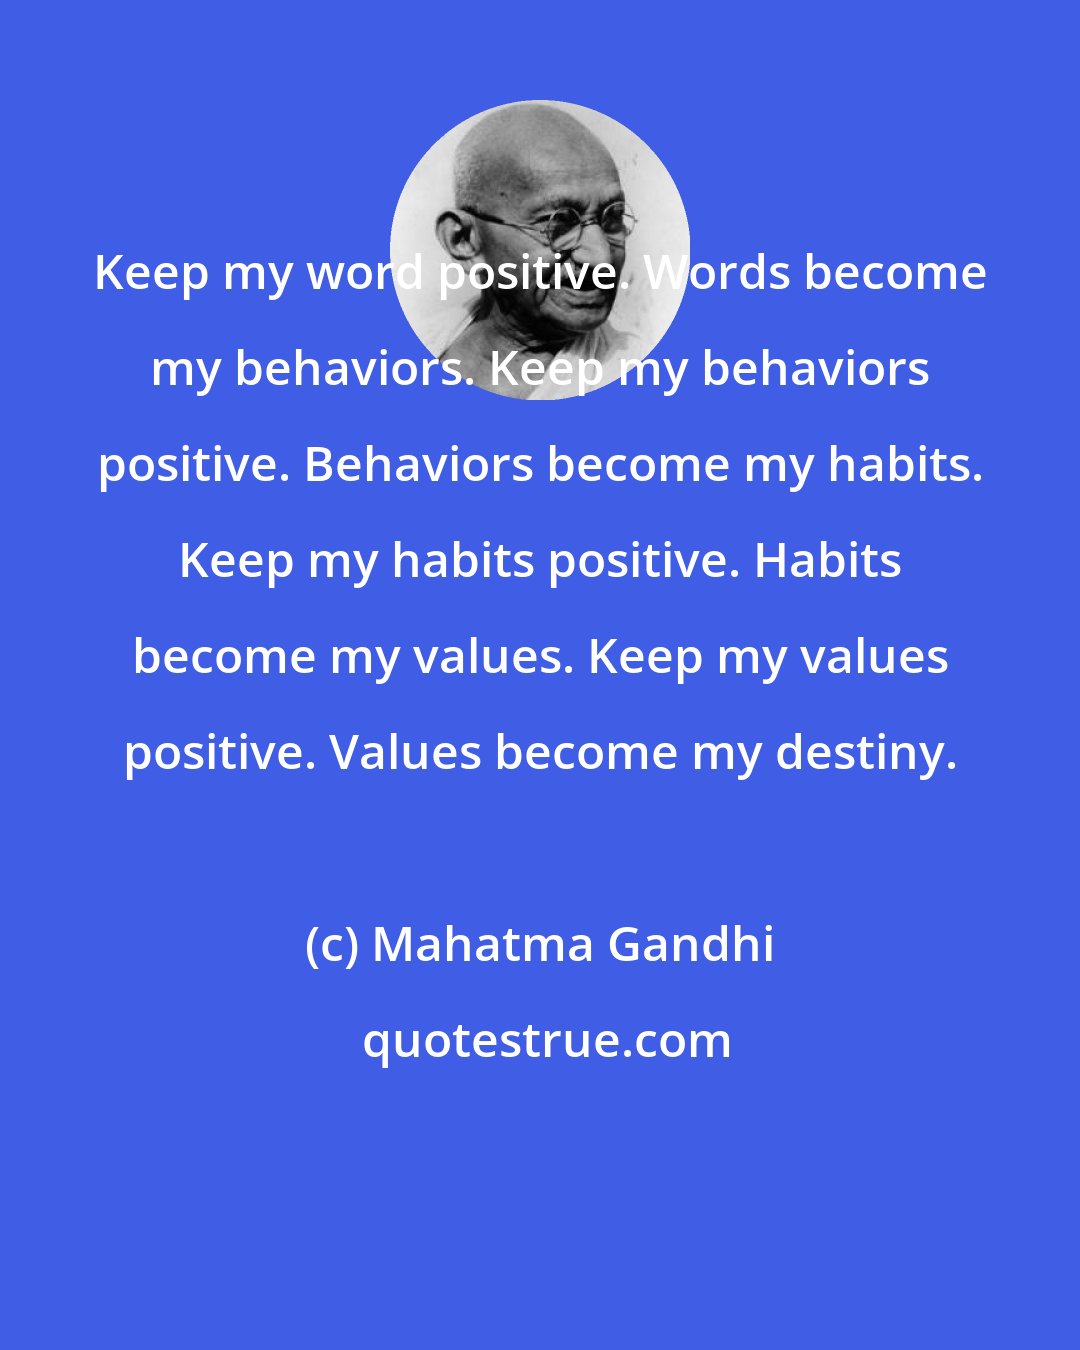 Mahatma Gandhi: Keep my word positive. Words become my behaviors. Keep my behaviors positive. Behaviors become my habits. Keep my habits positive. Habits become my values. Keep my values positive. Values become my destiny.